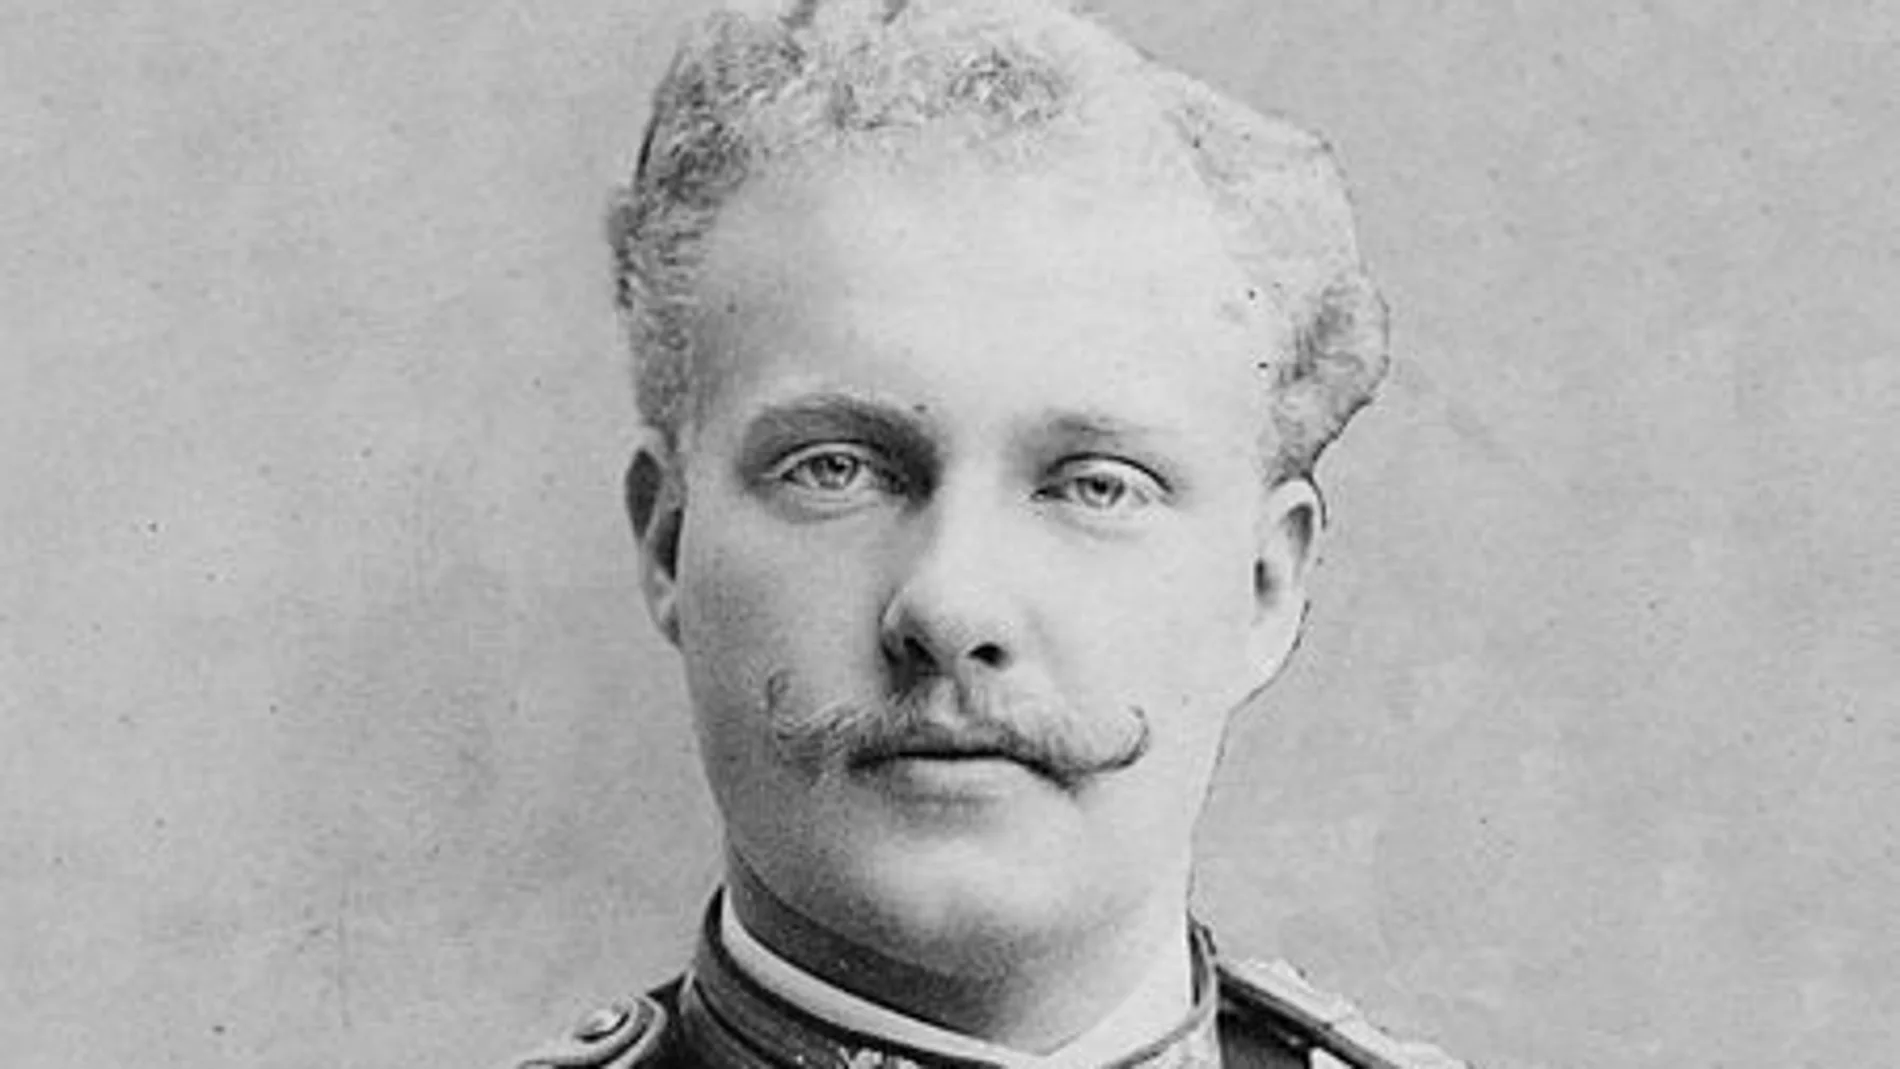 Carlos I de Portugal reinó de 1889 a 1908